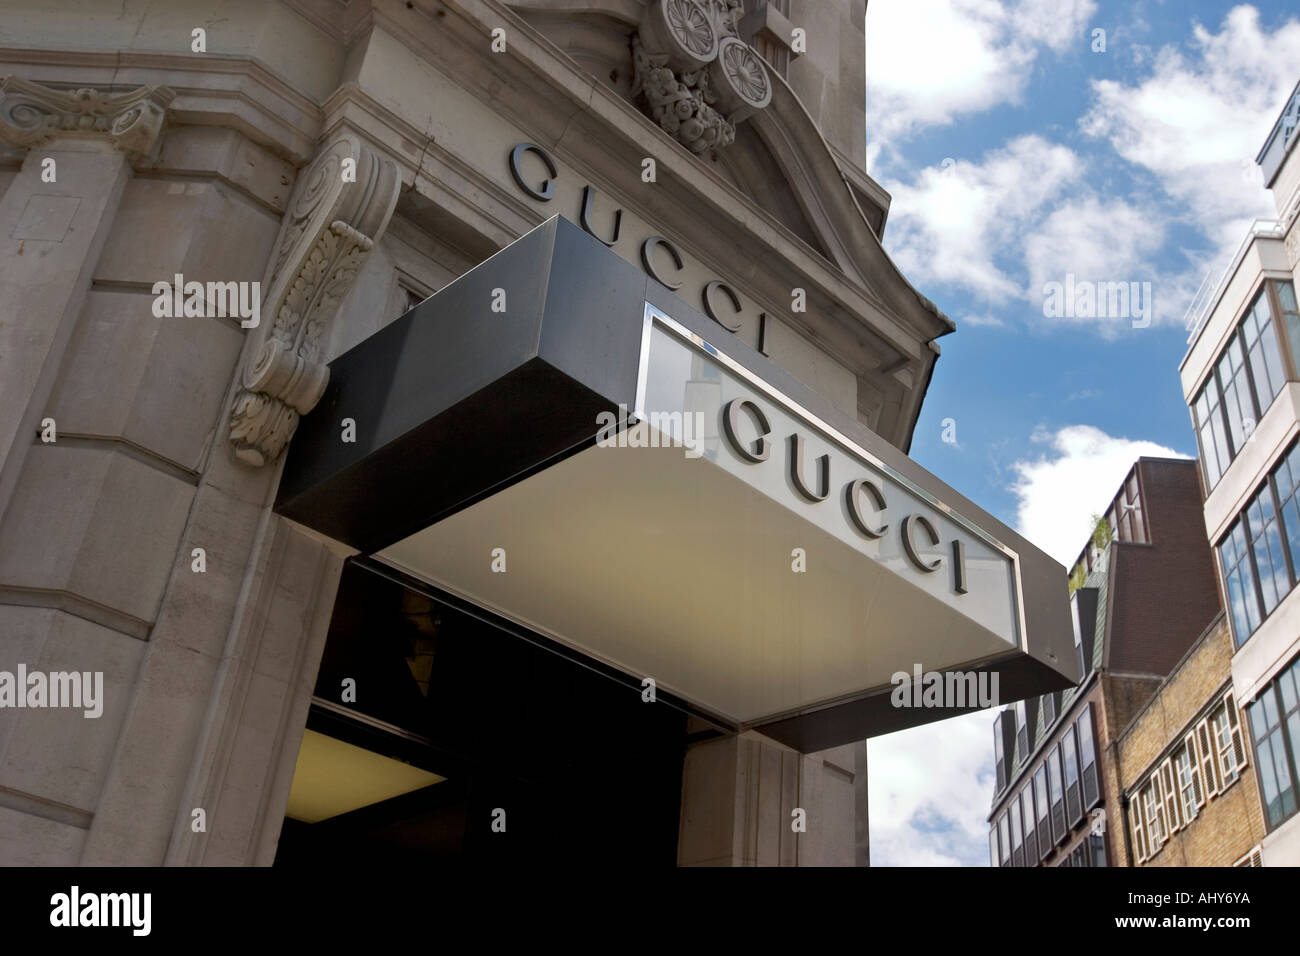 Gucci, Store; New Bond Street; London; England; UK Stock Photo - Alamy